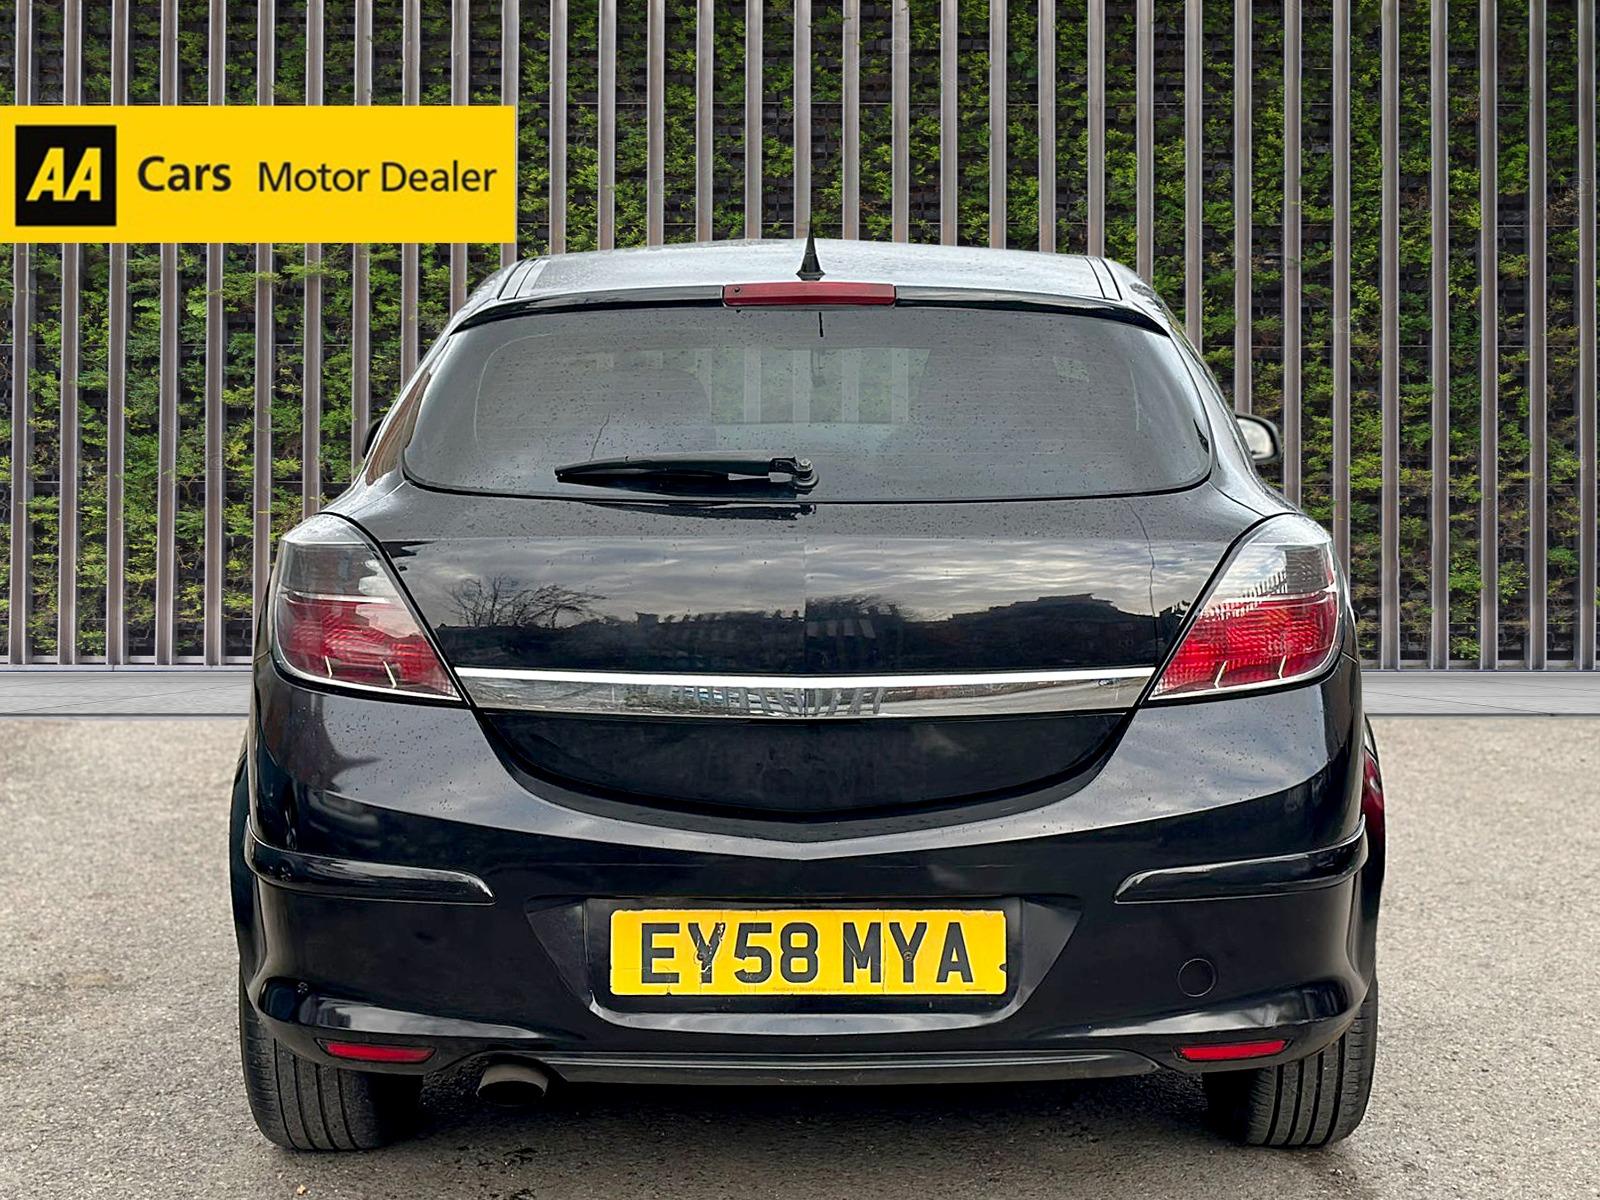 Vauxhall Astra 1.6i 16v SXi Sport Hatch 3dr Petrol Manual (155 g/km, 113 bhp)